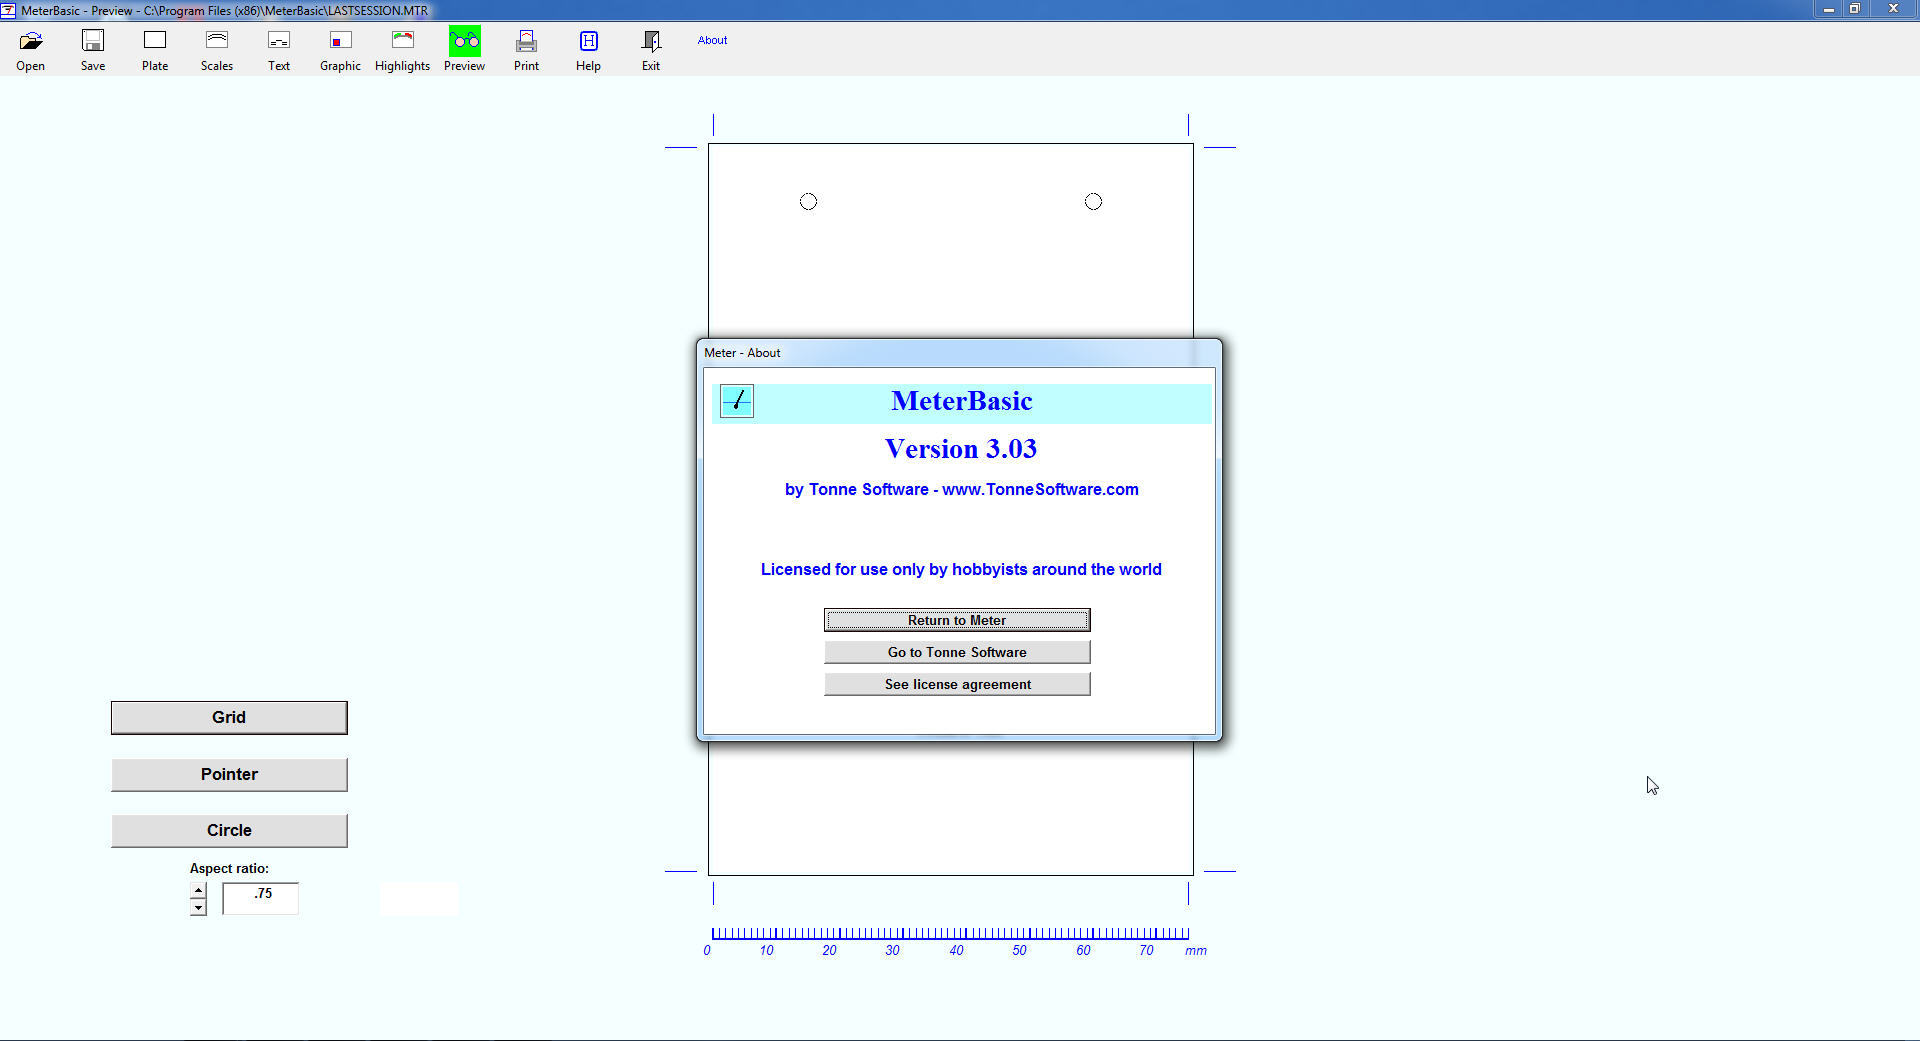 MeterBasic 3.0 : Main window